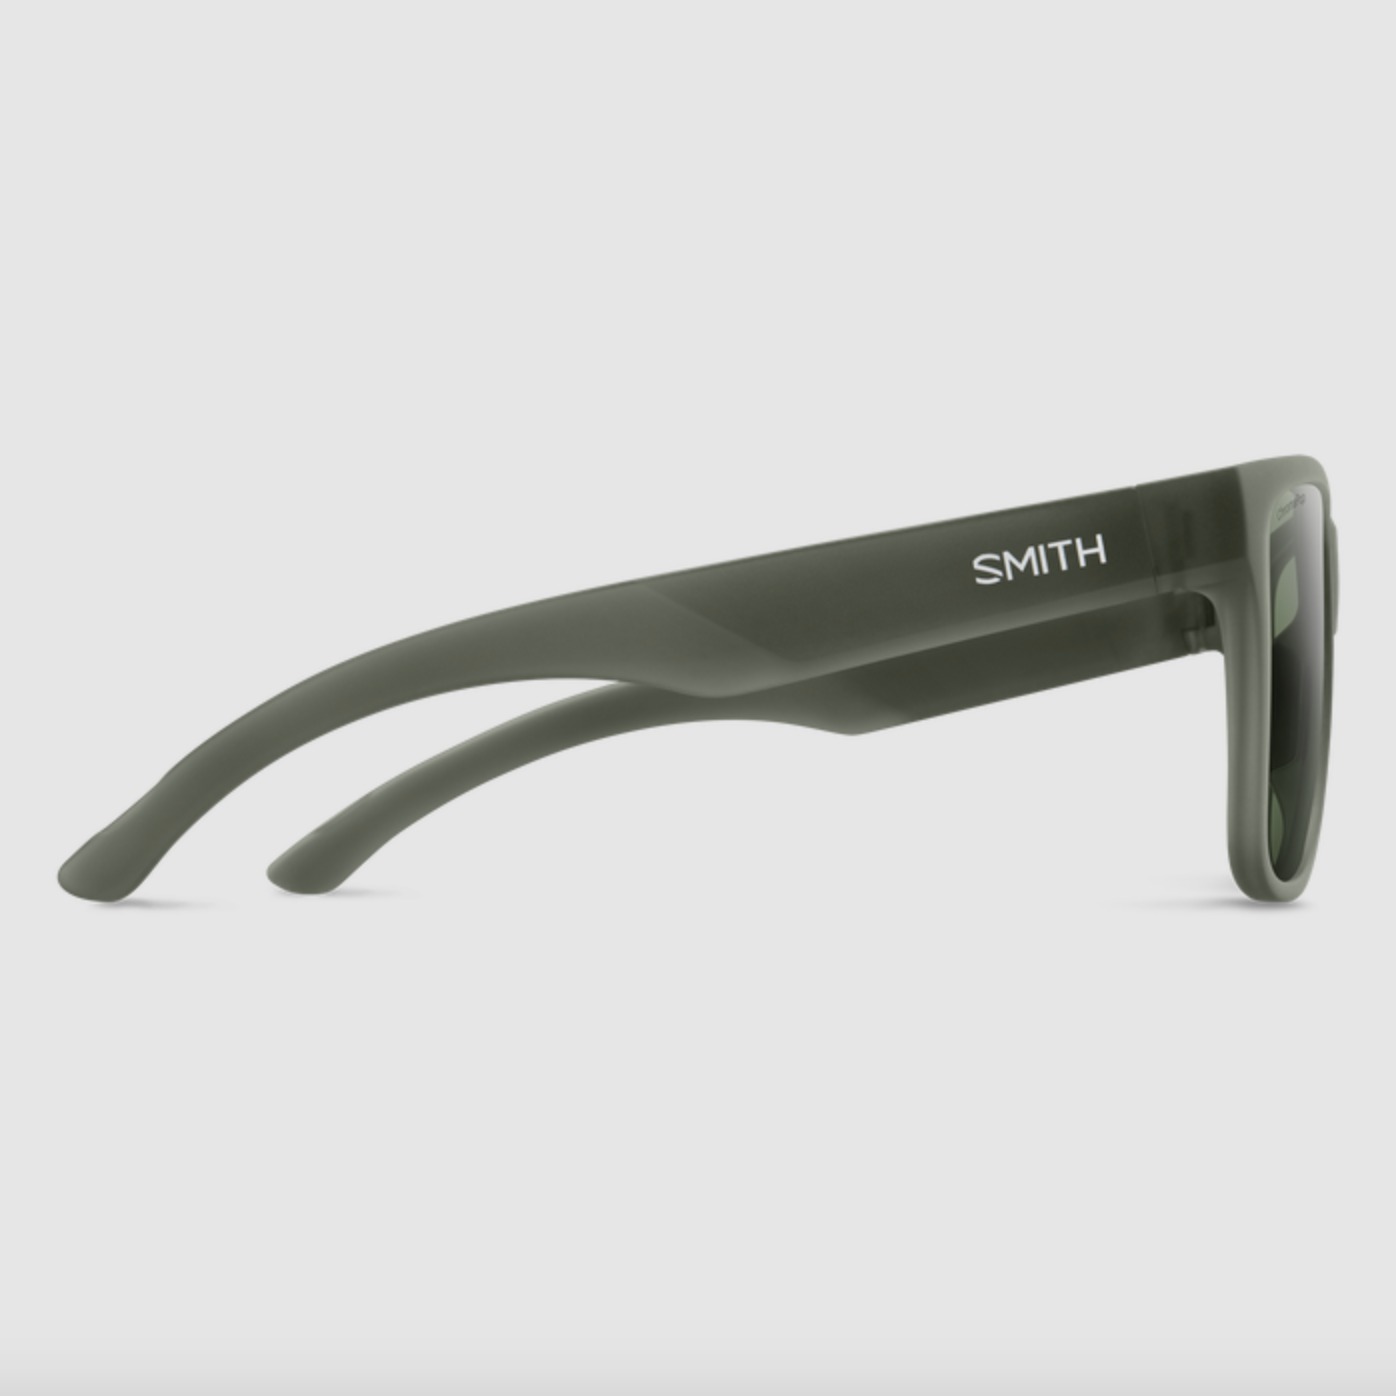 Smith Lowdown XL 2 Matte Moss Crystal ChromaPop Polarized  Gray Green Sunglasses